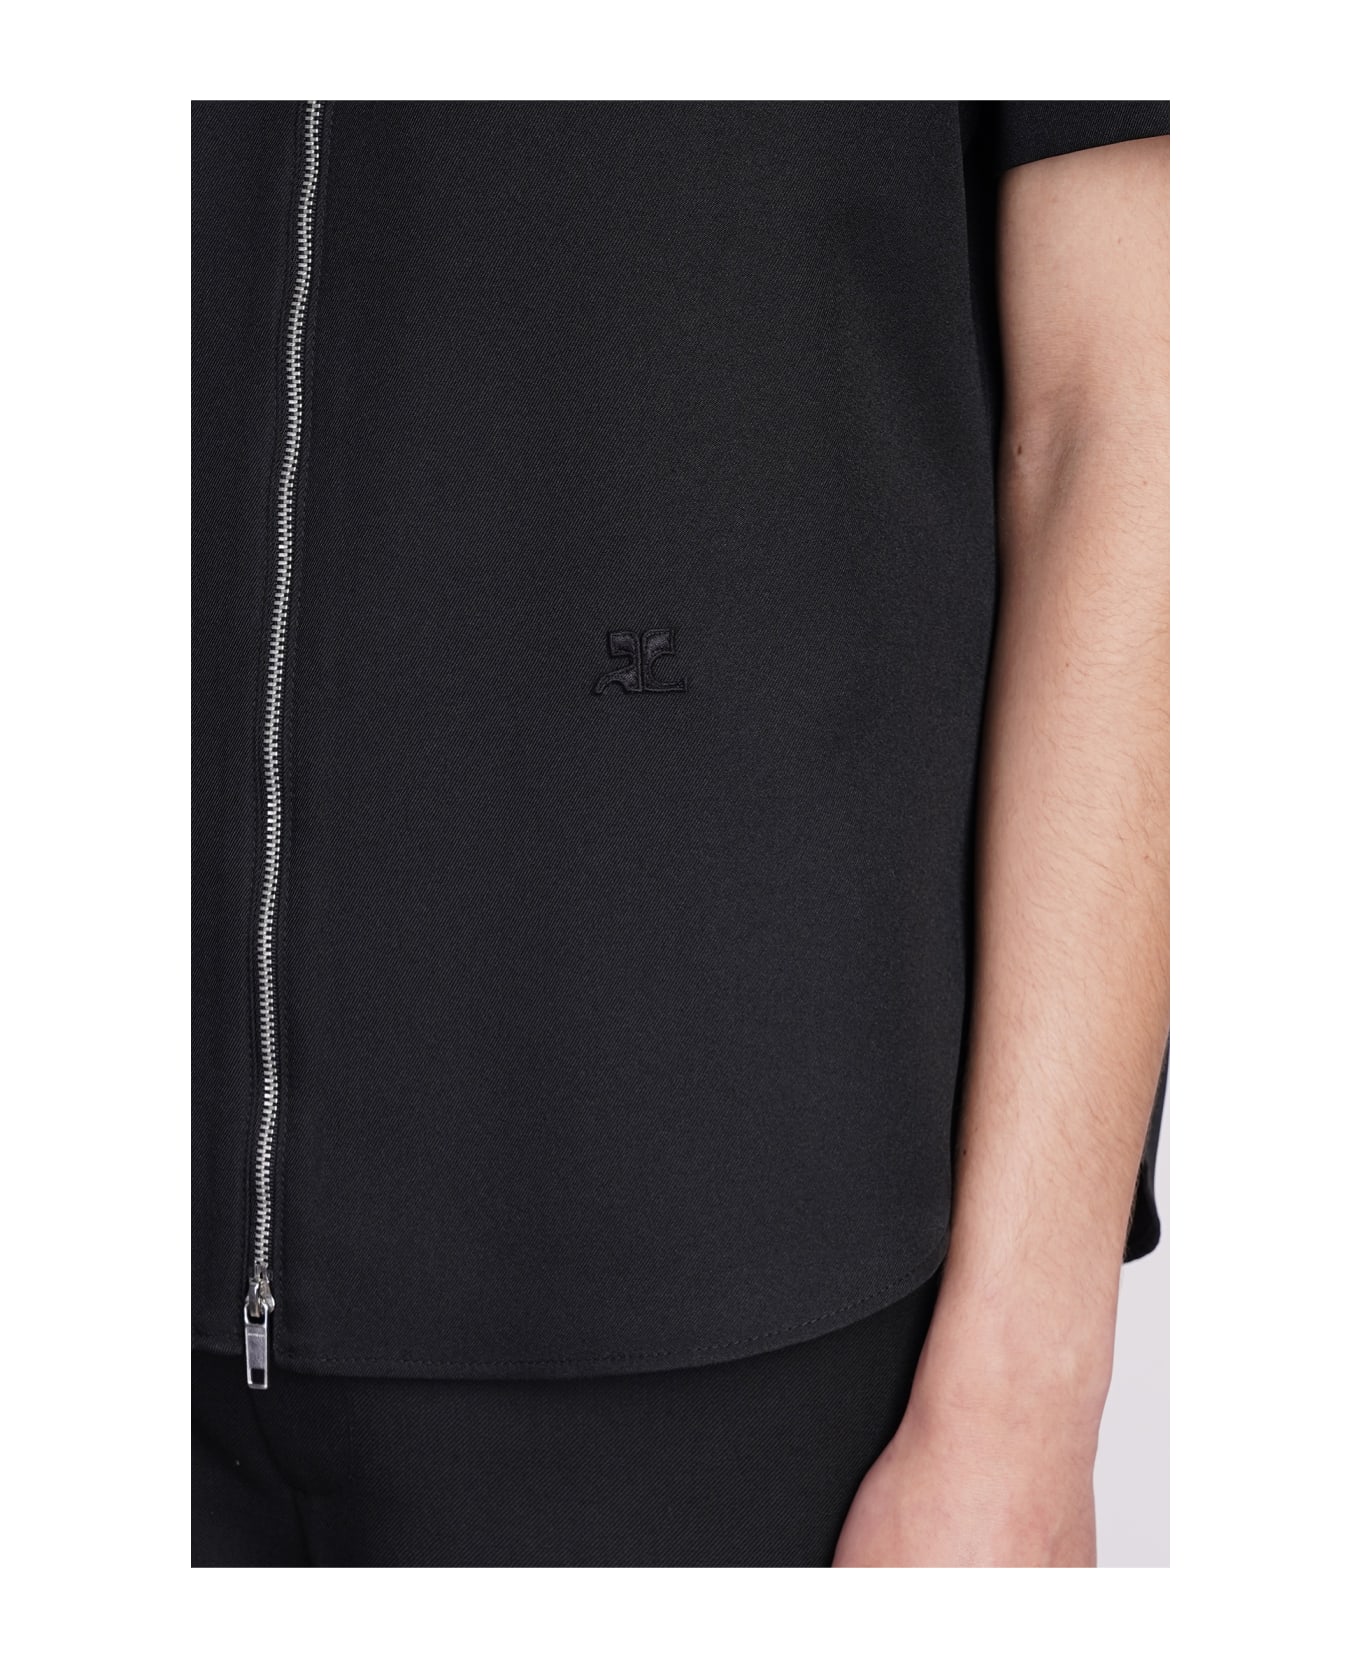 Courrèges Shirt In Black Polyester - black